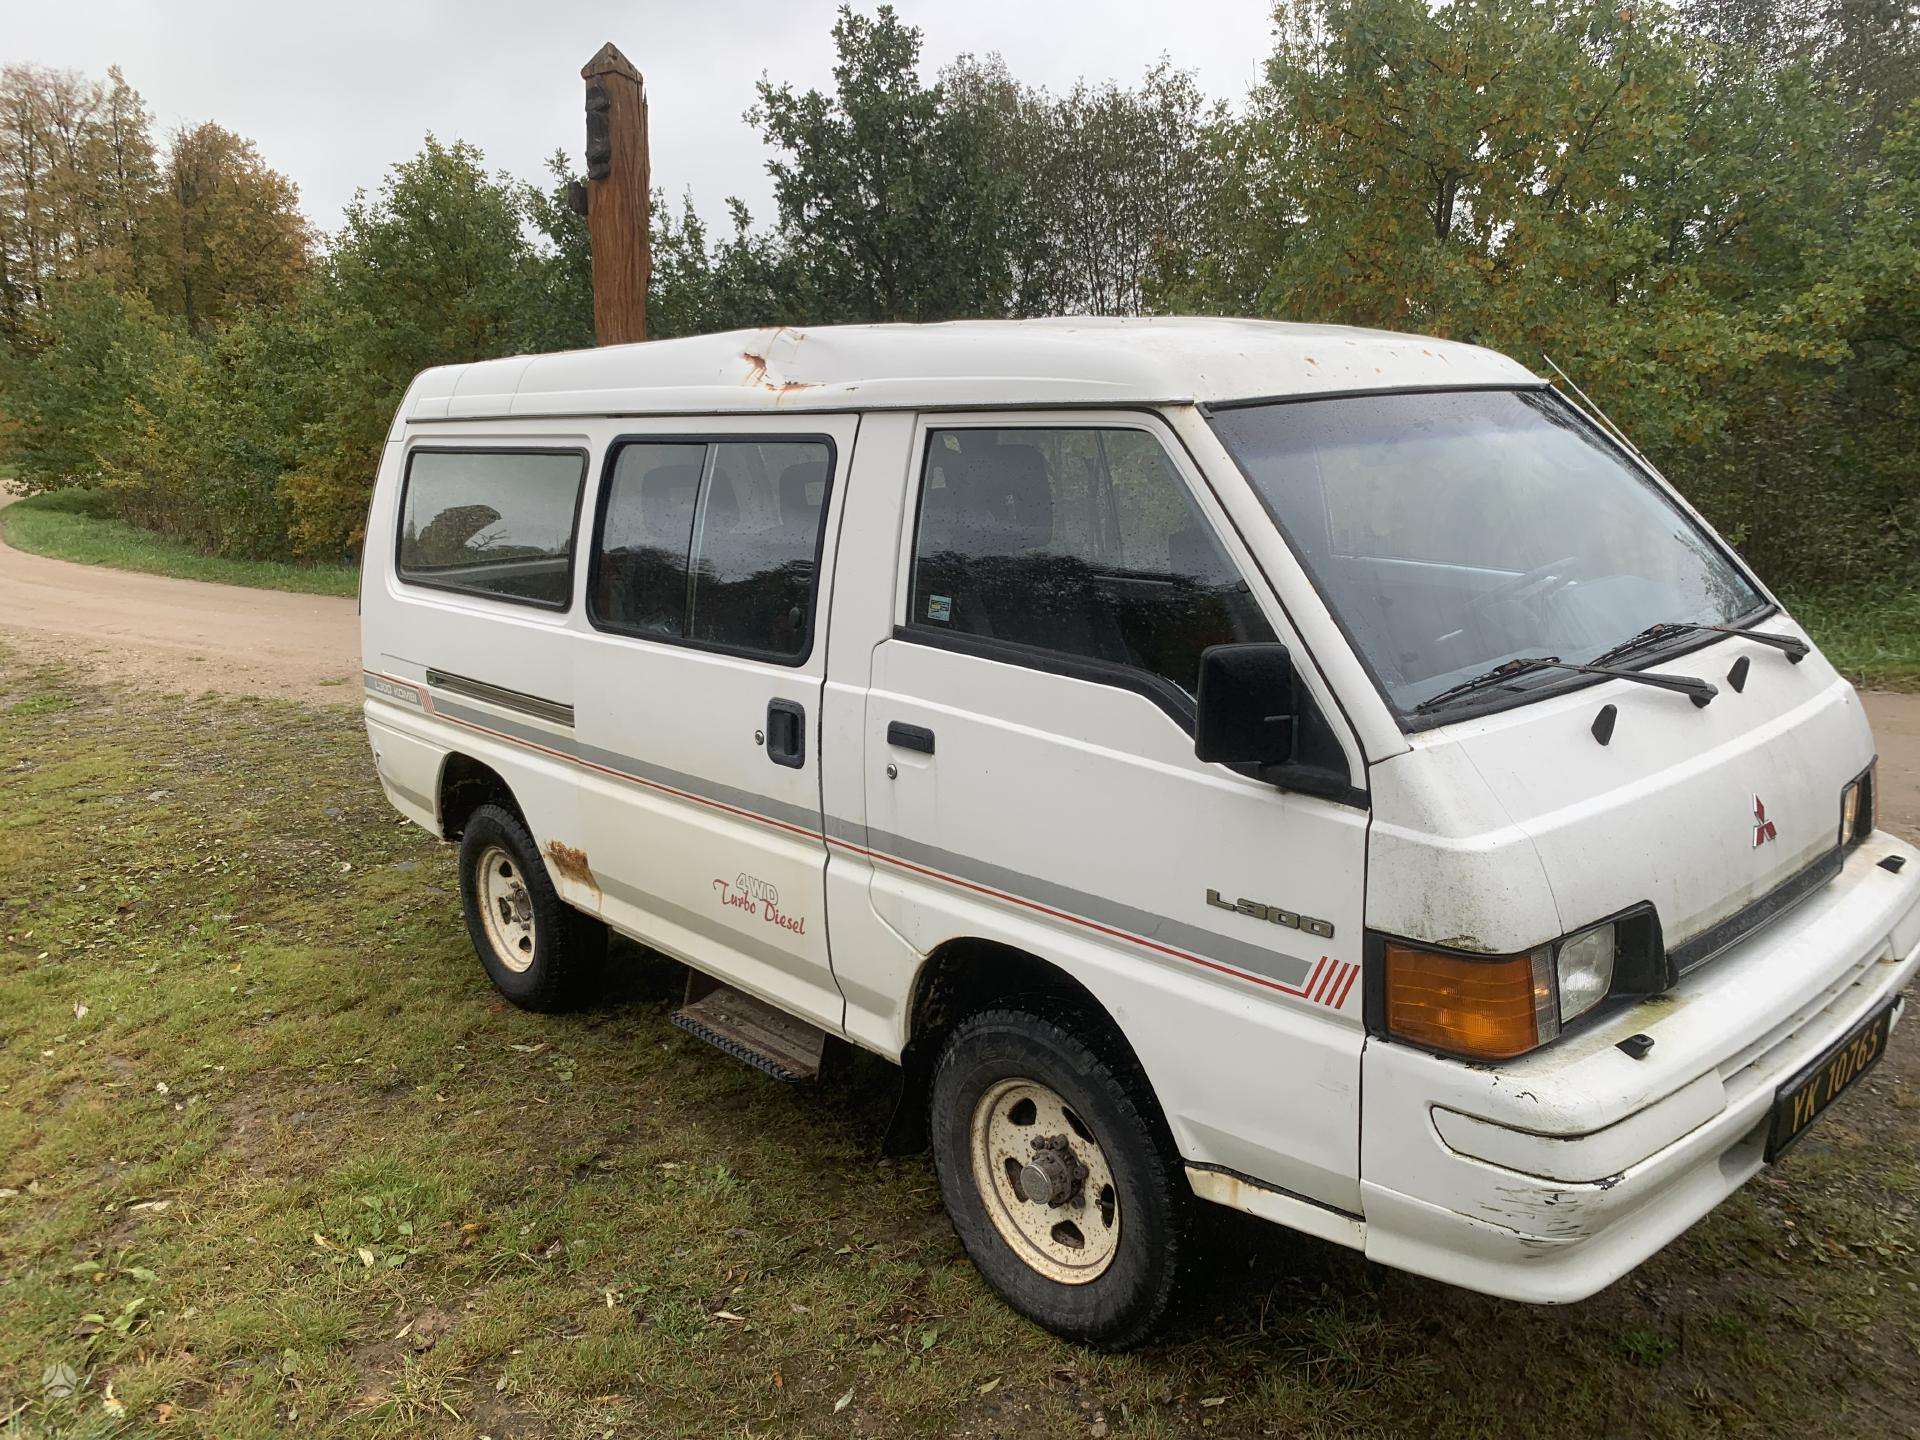 Mitsubishi L300, 2.5 l., Пассажирский микроавтобус 1996 m., | A24879721